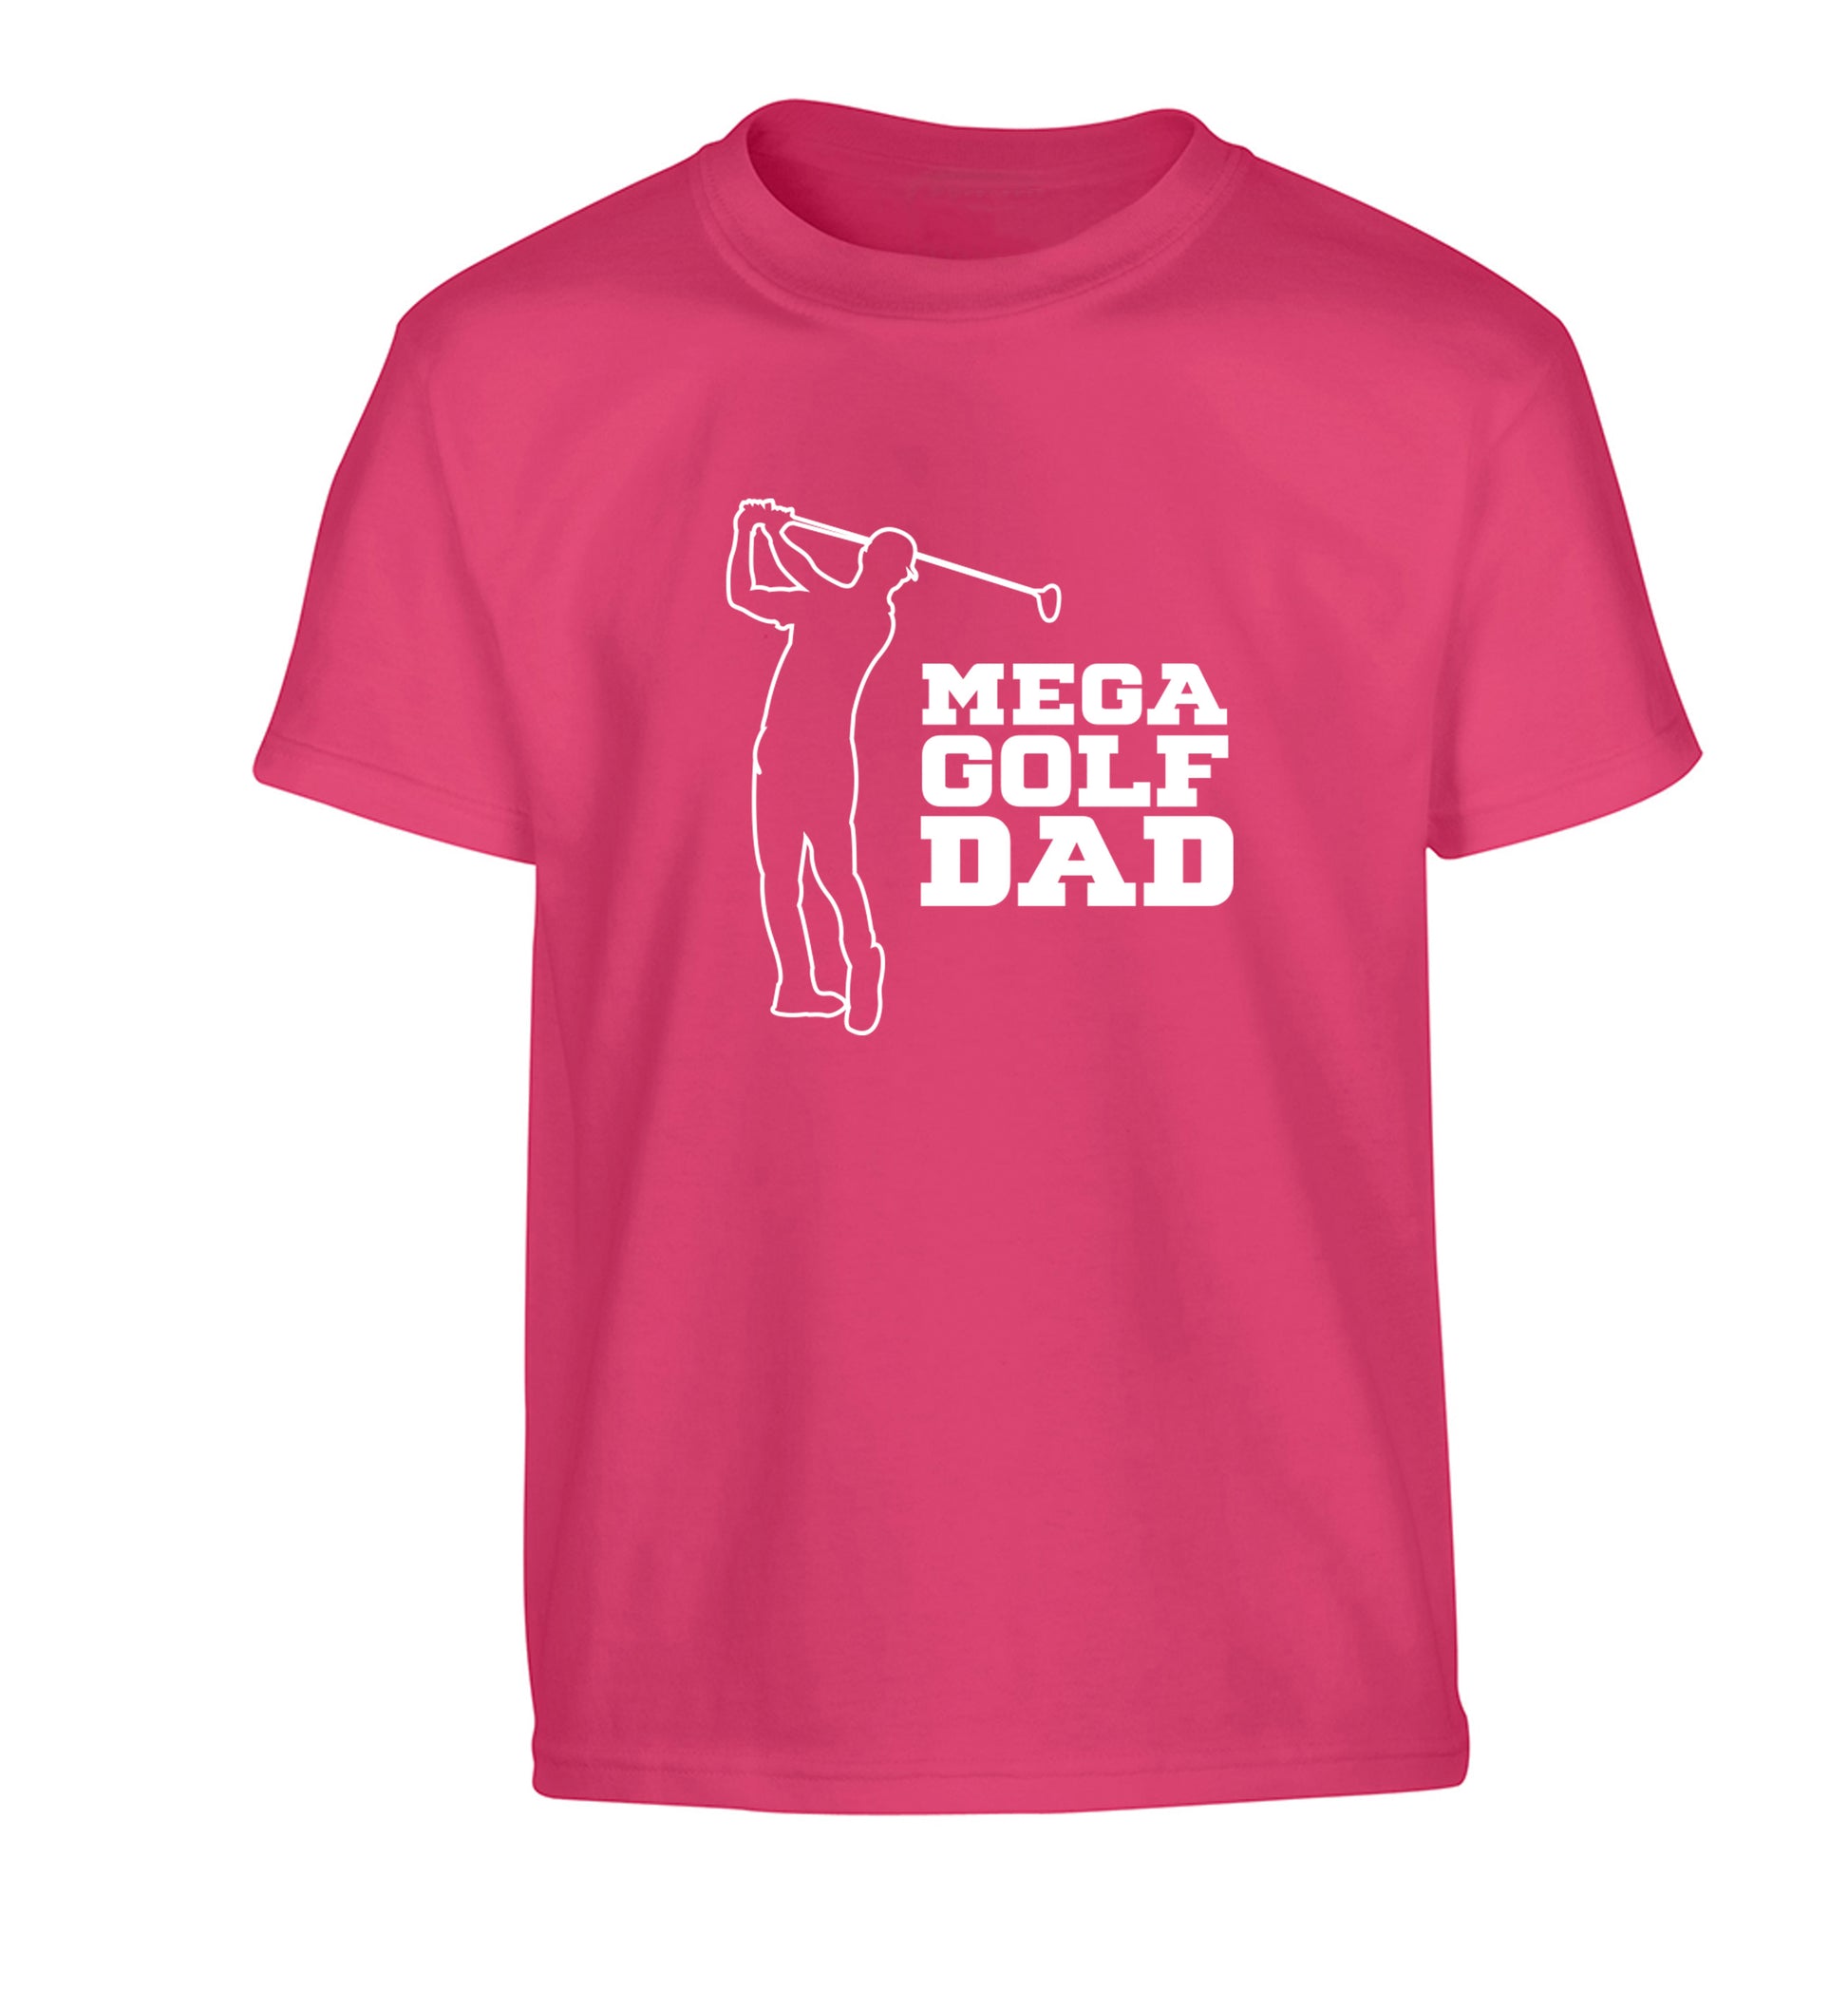 Mega golfing dad Children's pink Tshirt 12-13 Years